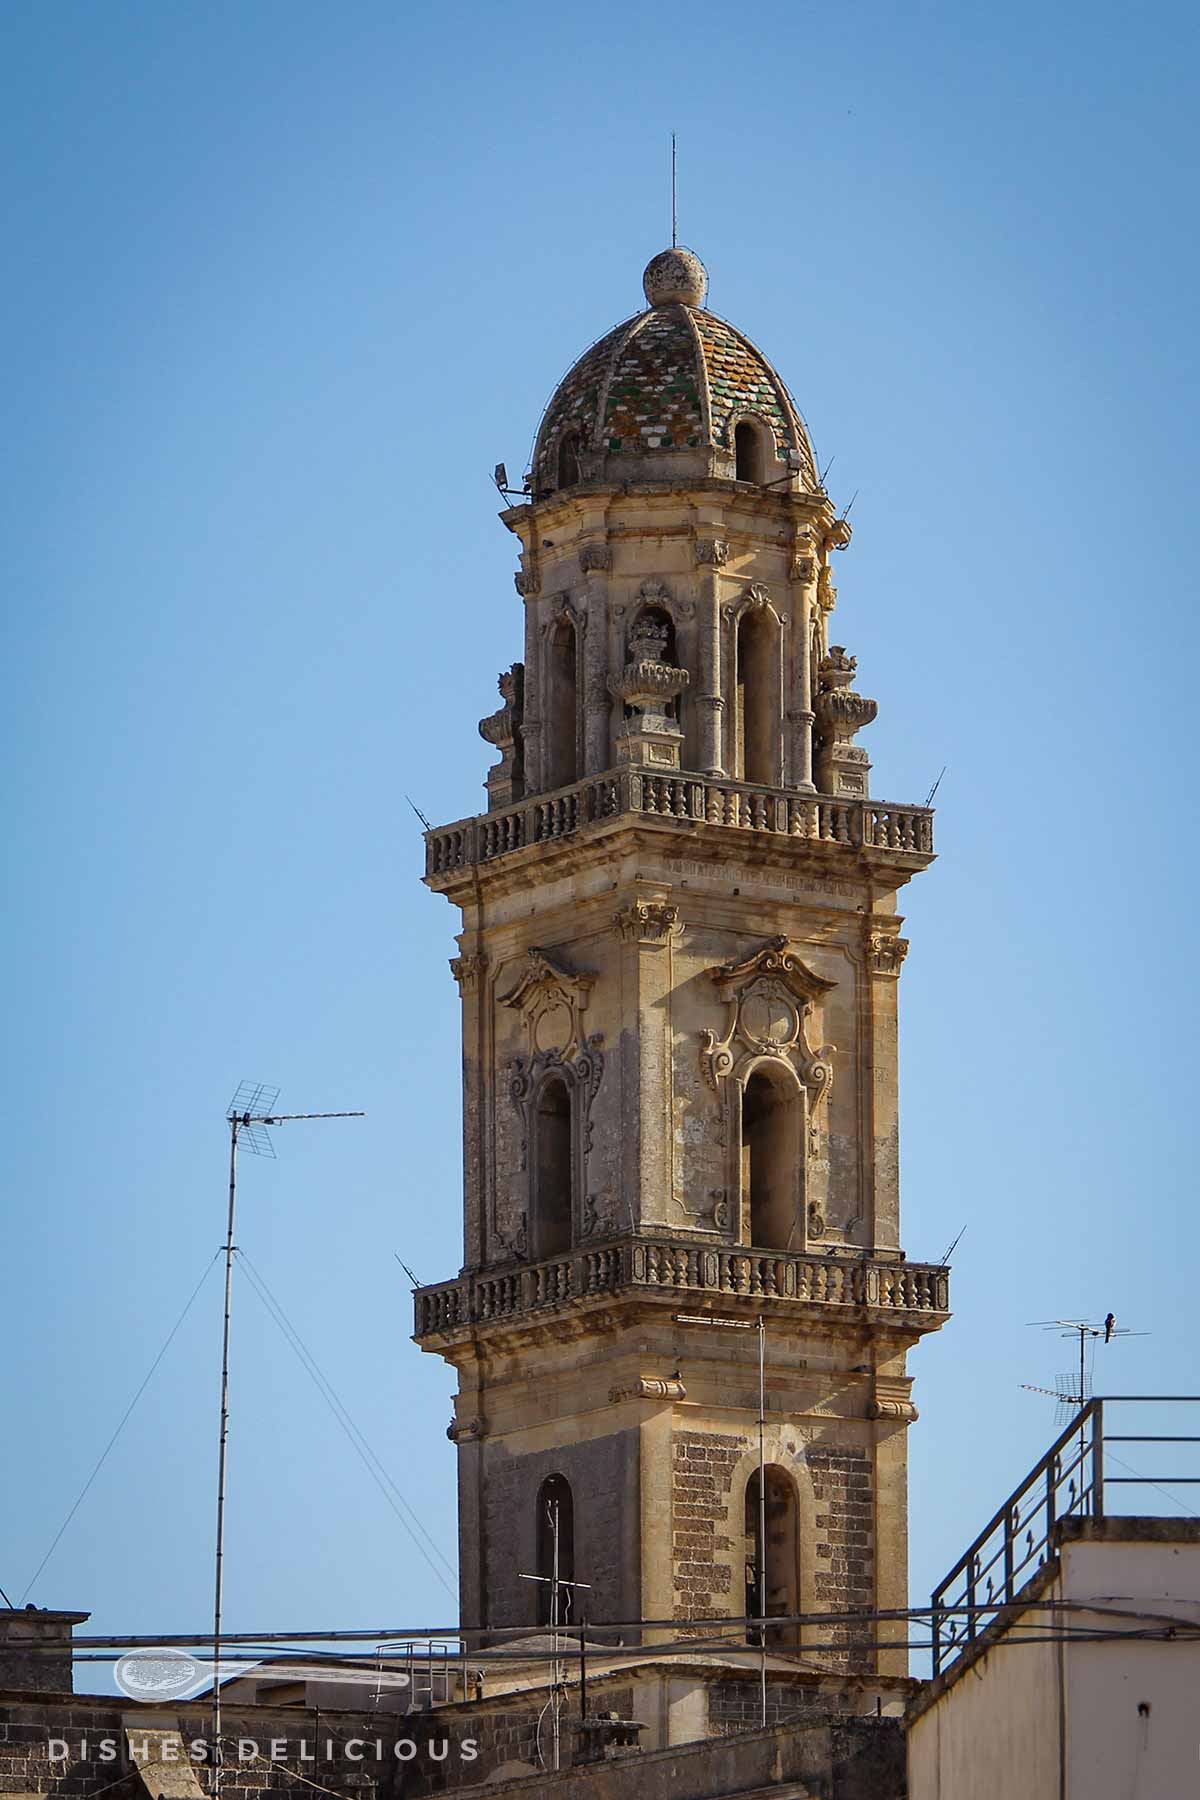 Glockenturm mit Majolikakuppel in Sternatia.